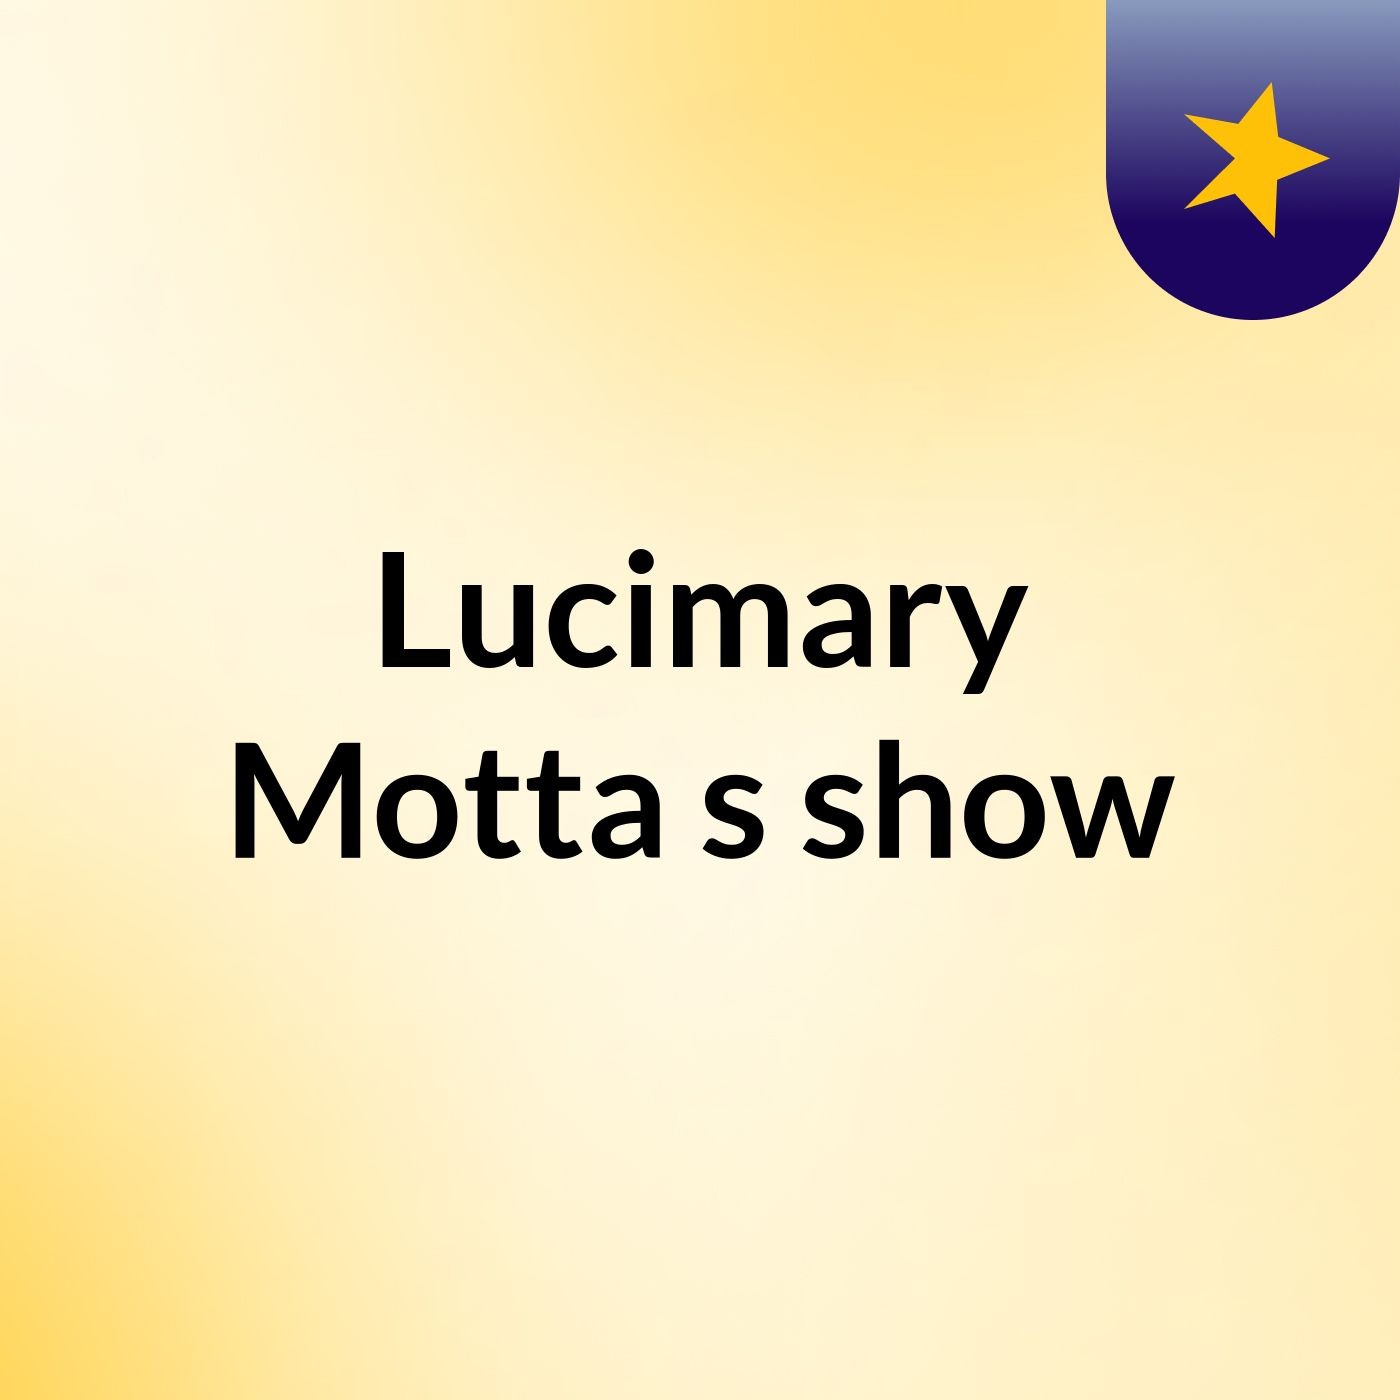 Lucimary Motta's show